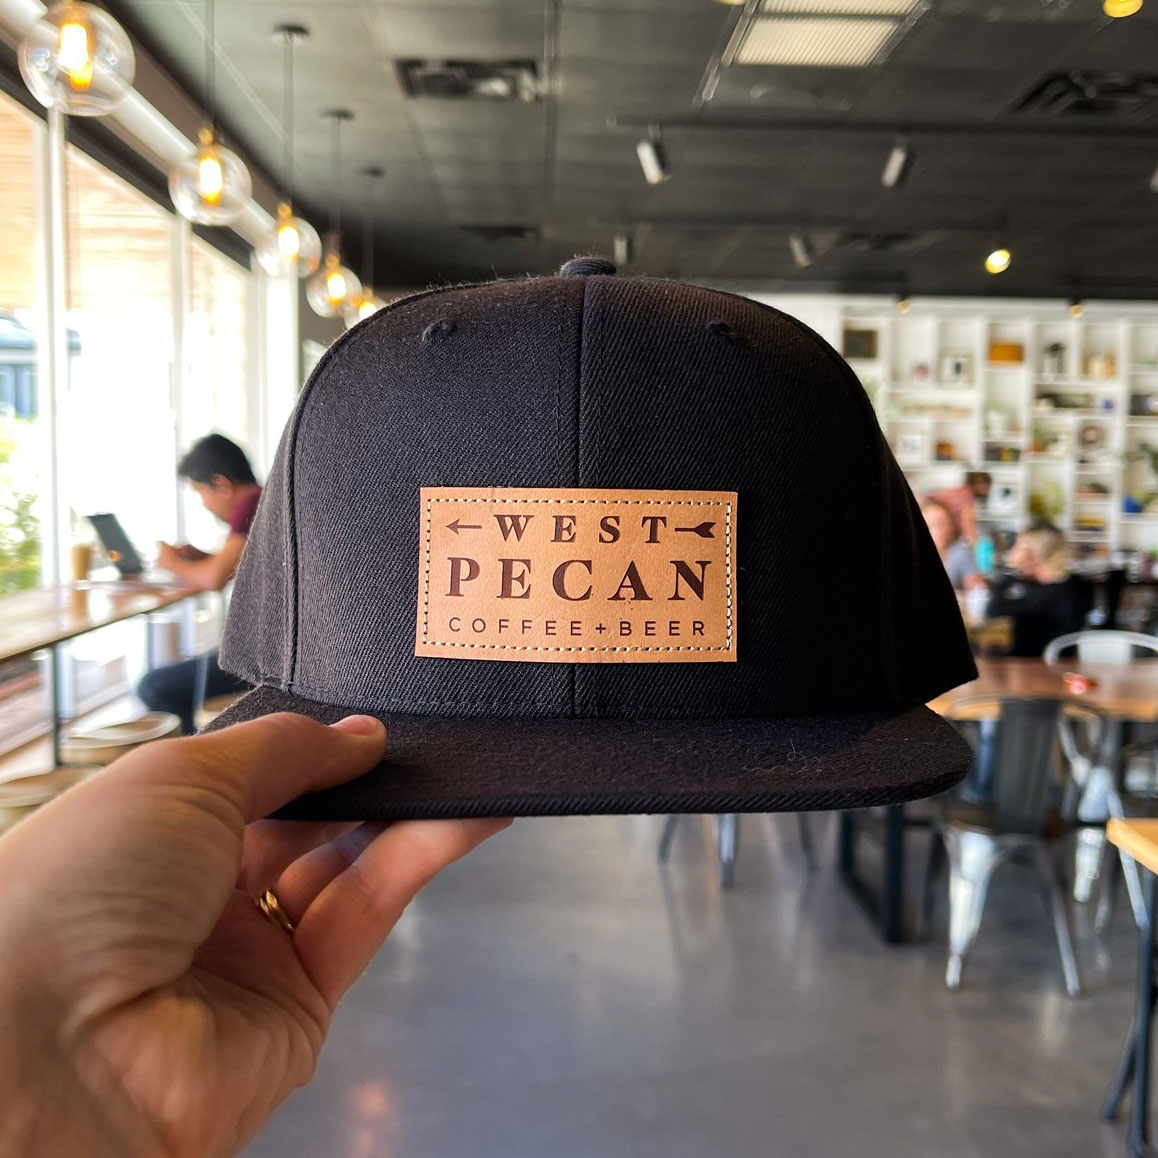 West Pecan Coffee+Beer branding in the wild Pound Design